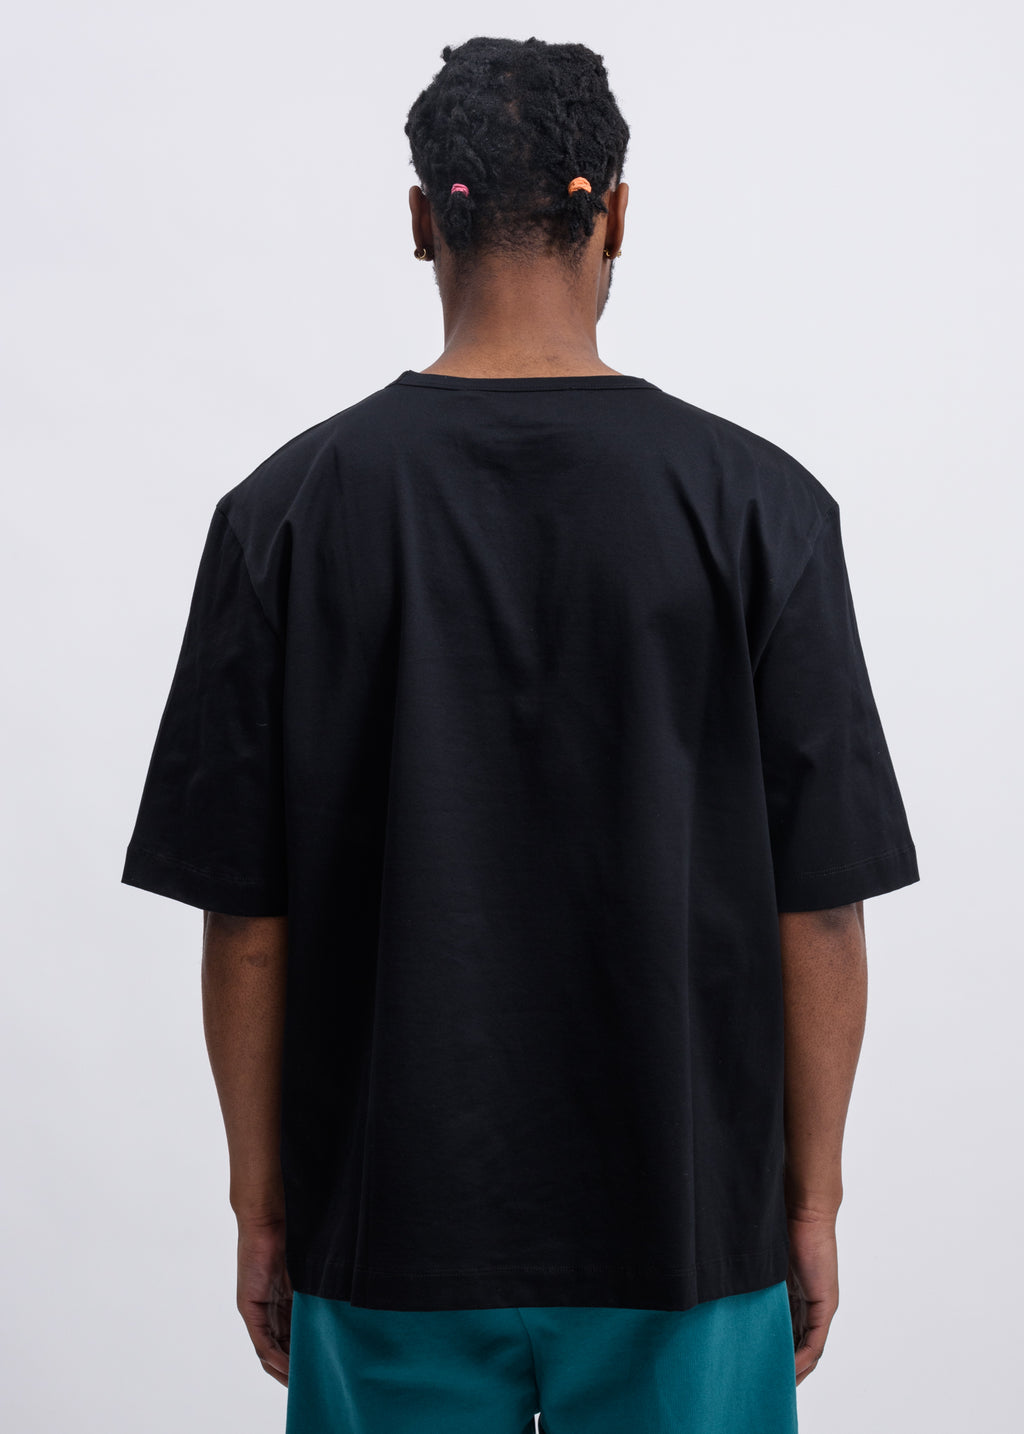 017-shop-etudes-black-unity-definition-wikipedia-t-shirt